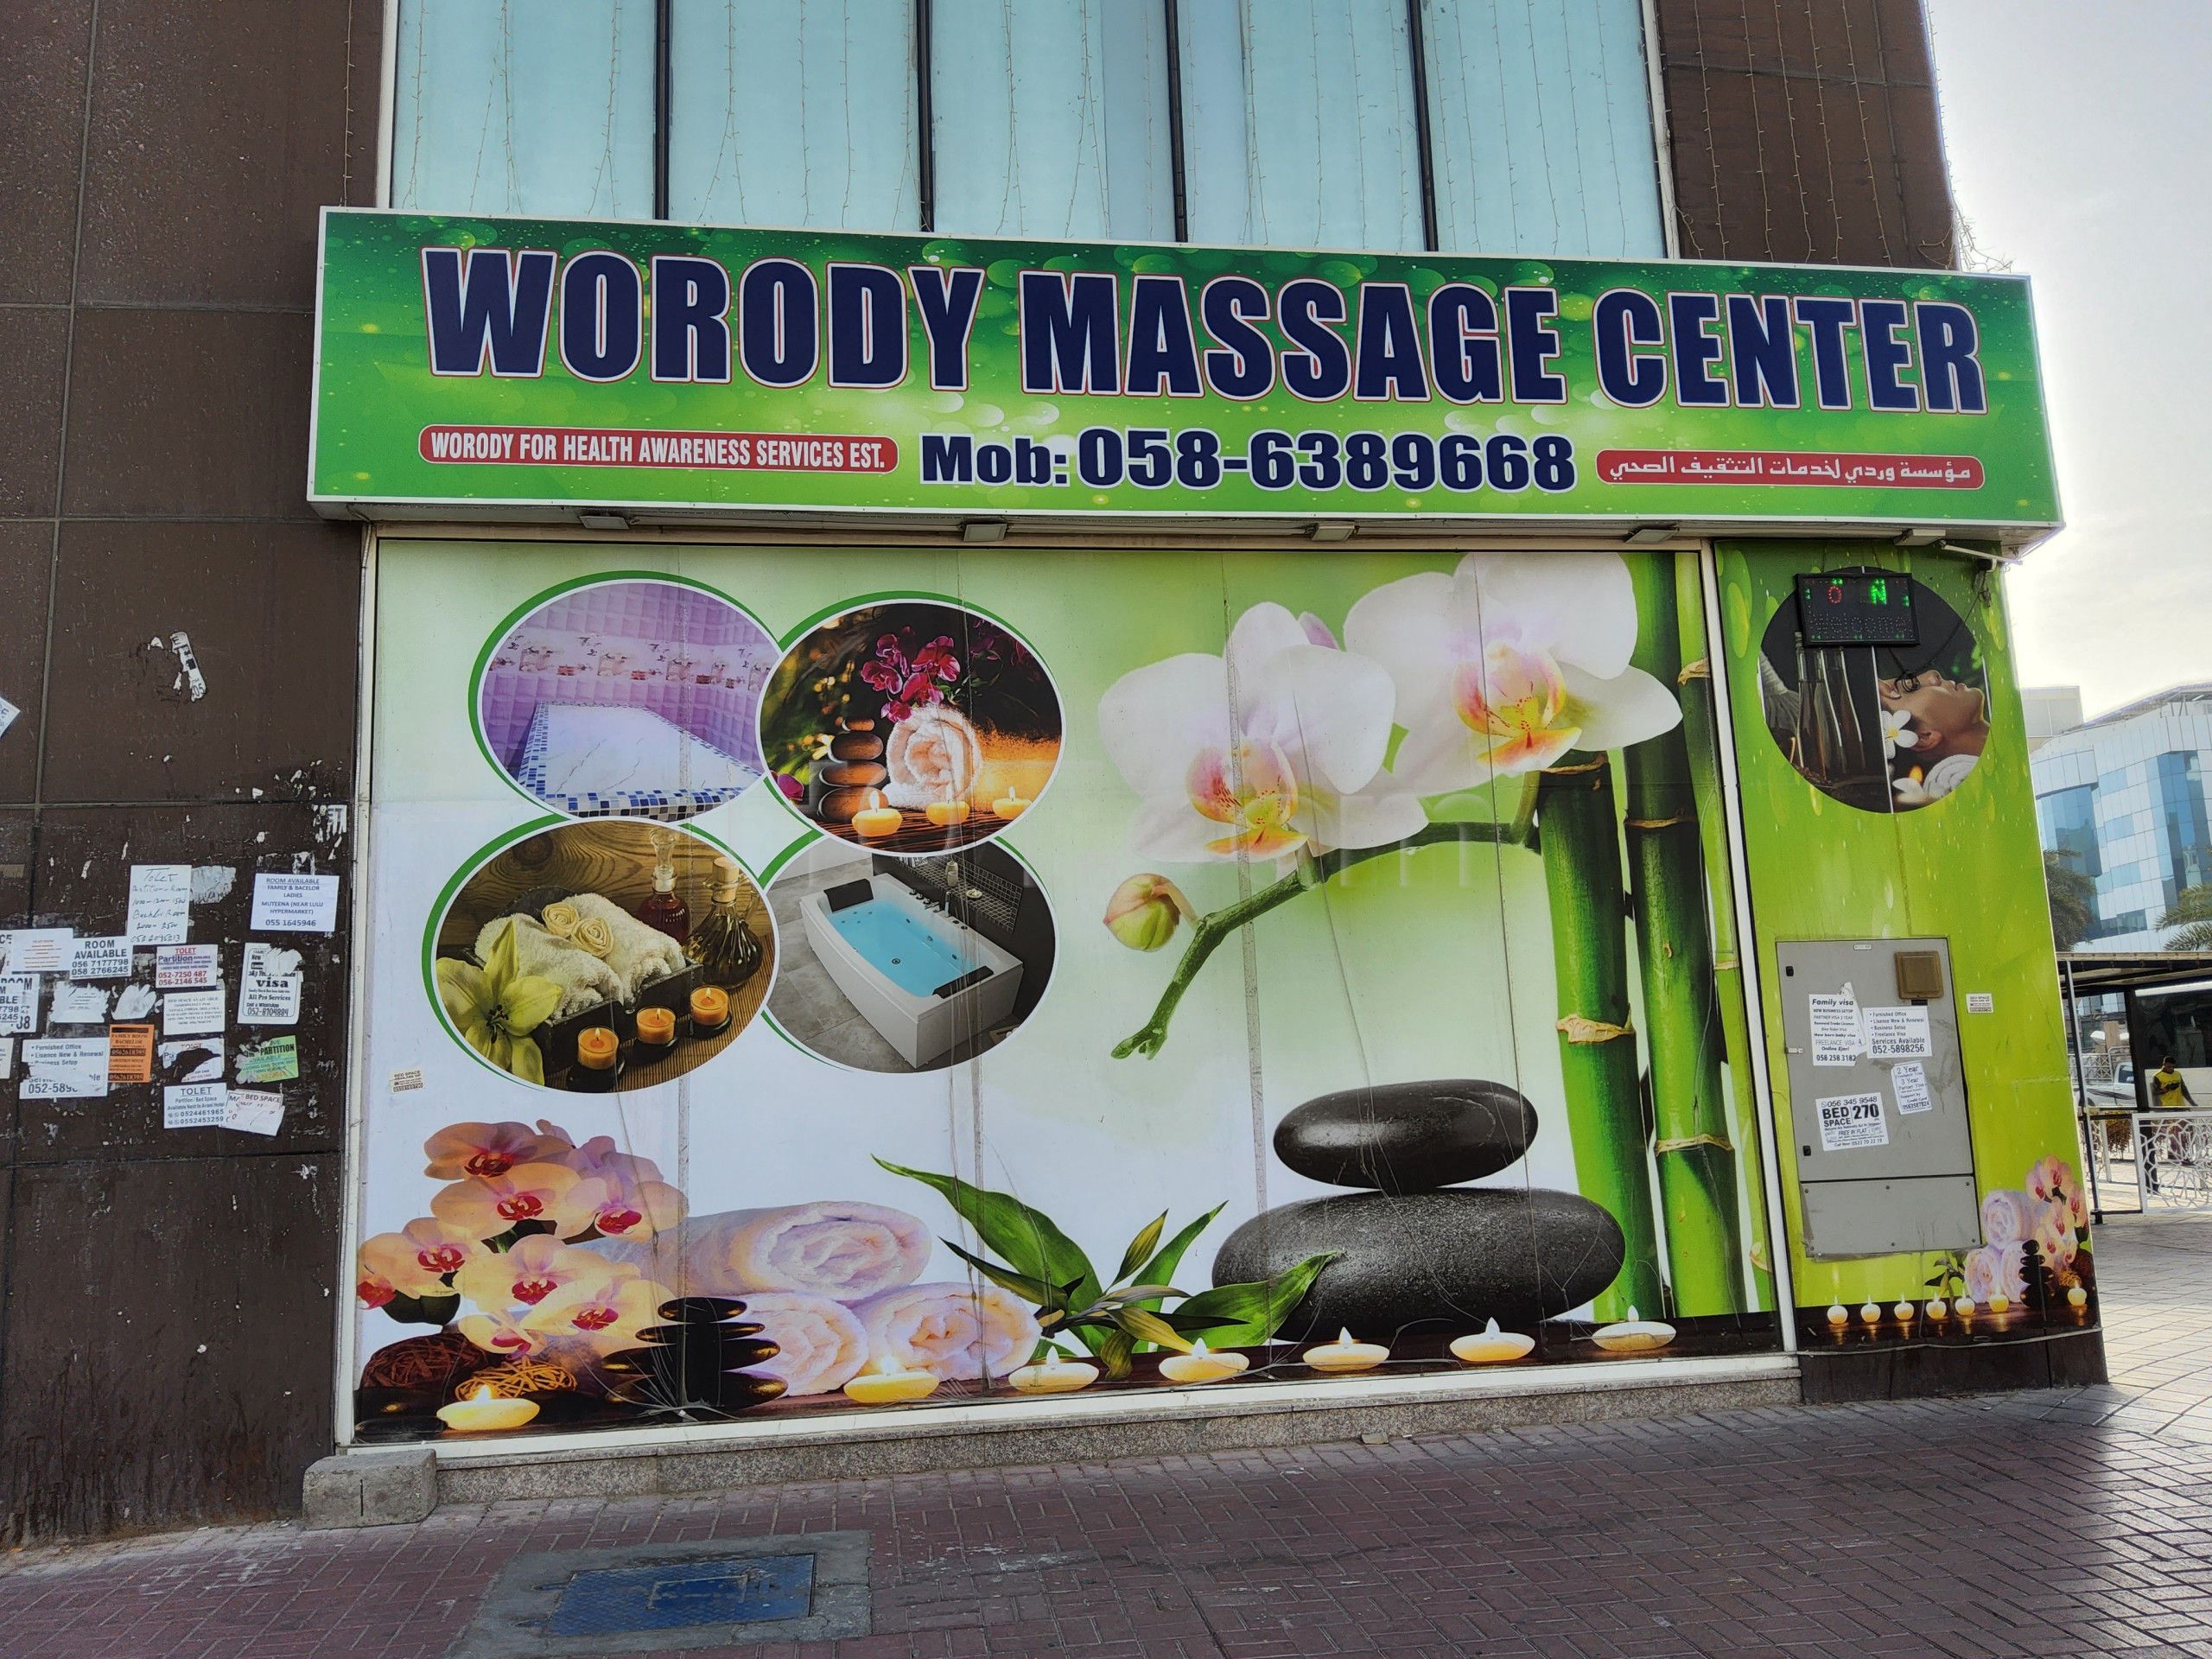 Dubai, United Arab Emirates Worody Massage